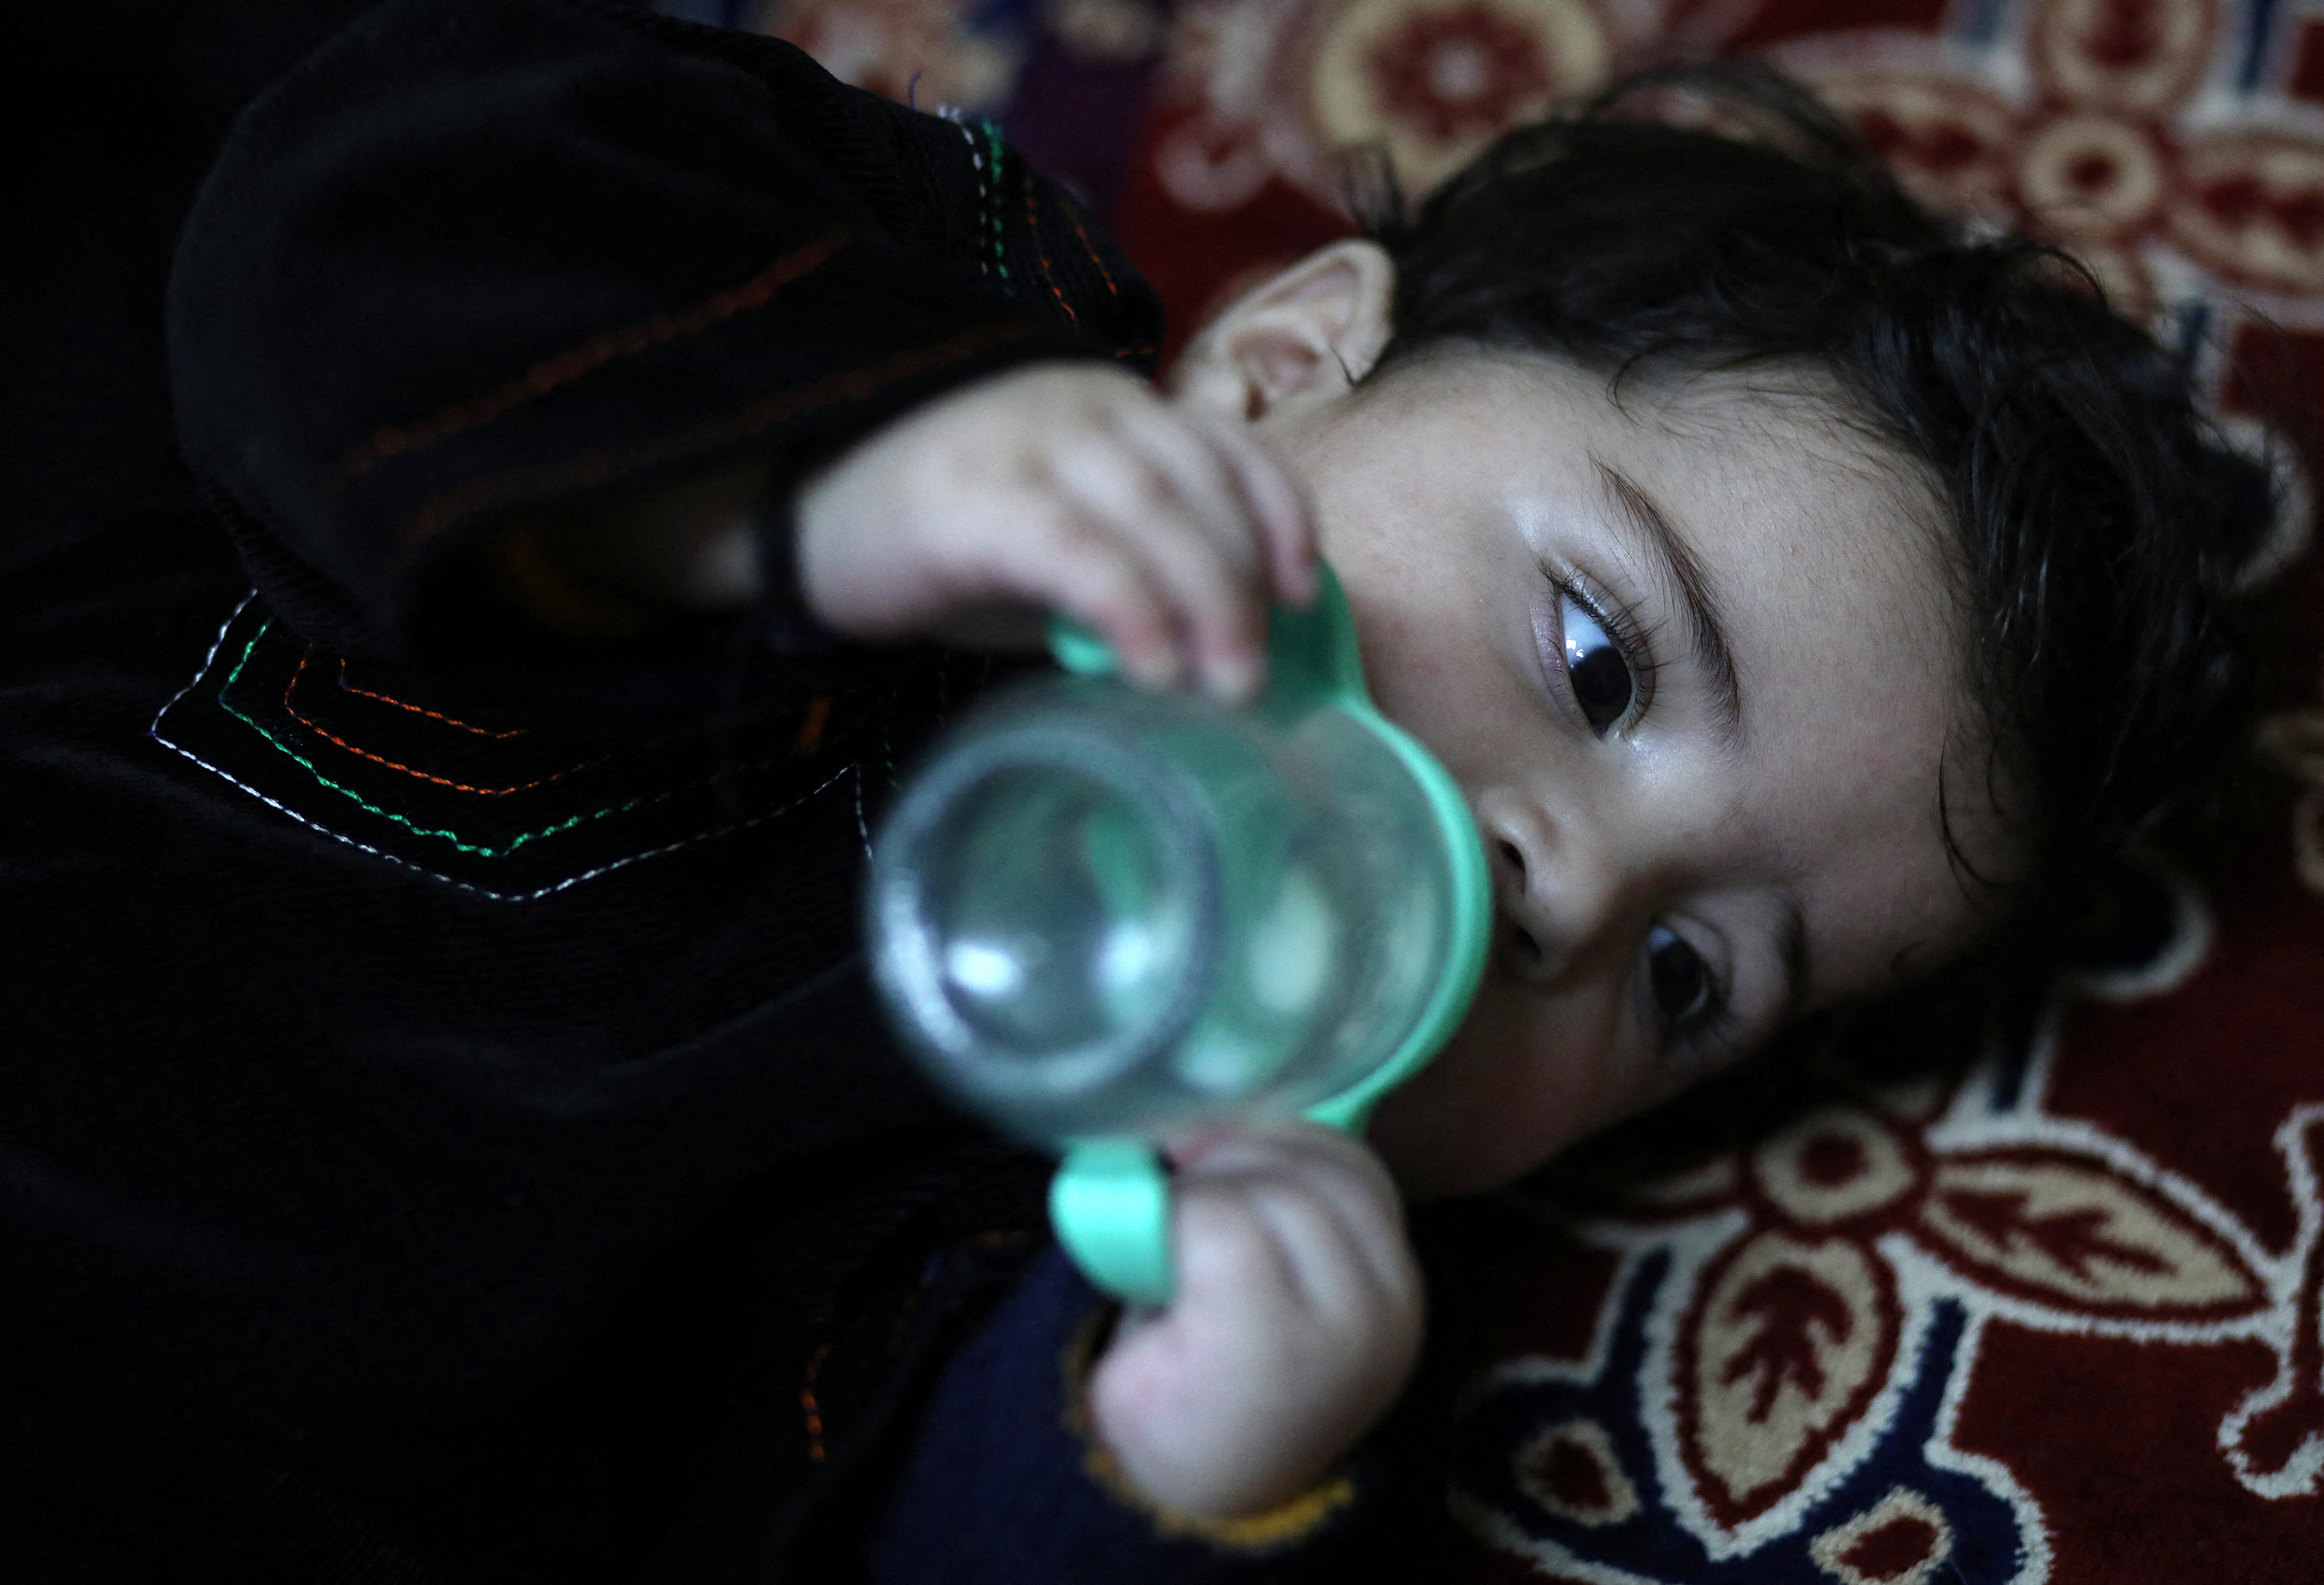 Baby Sohail Ahmadi drinks milk from a bottle inside the house of Hamid Safi in Kabul